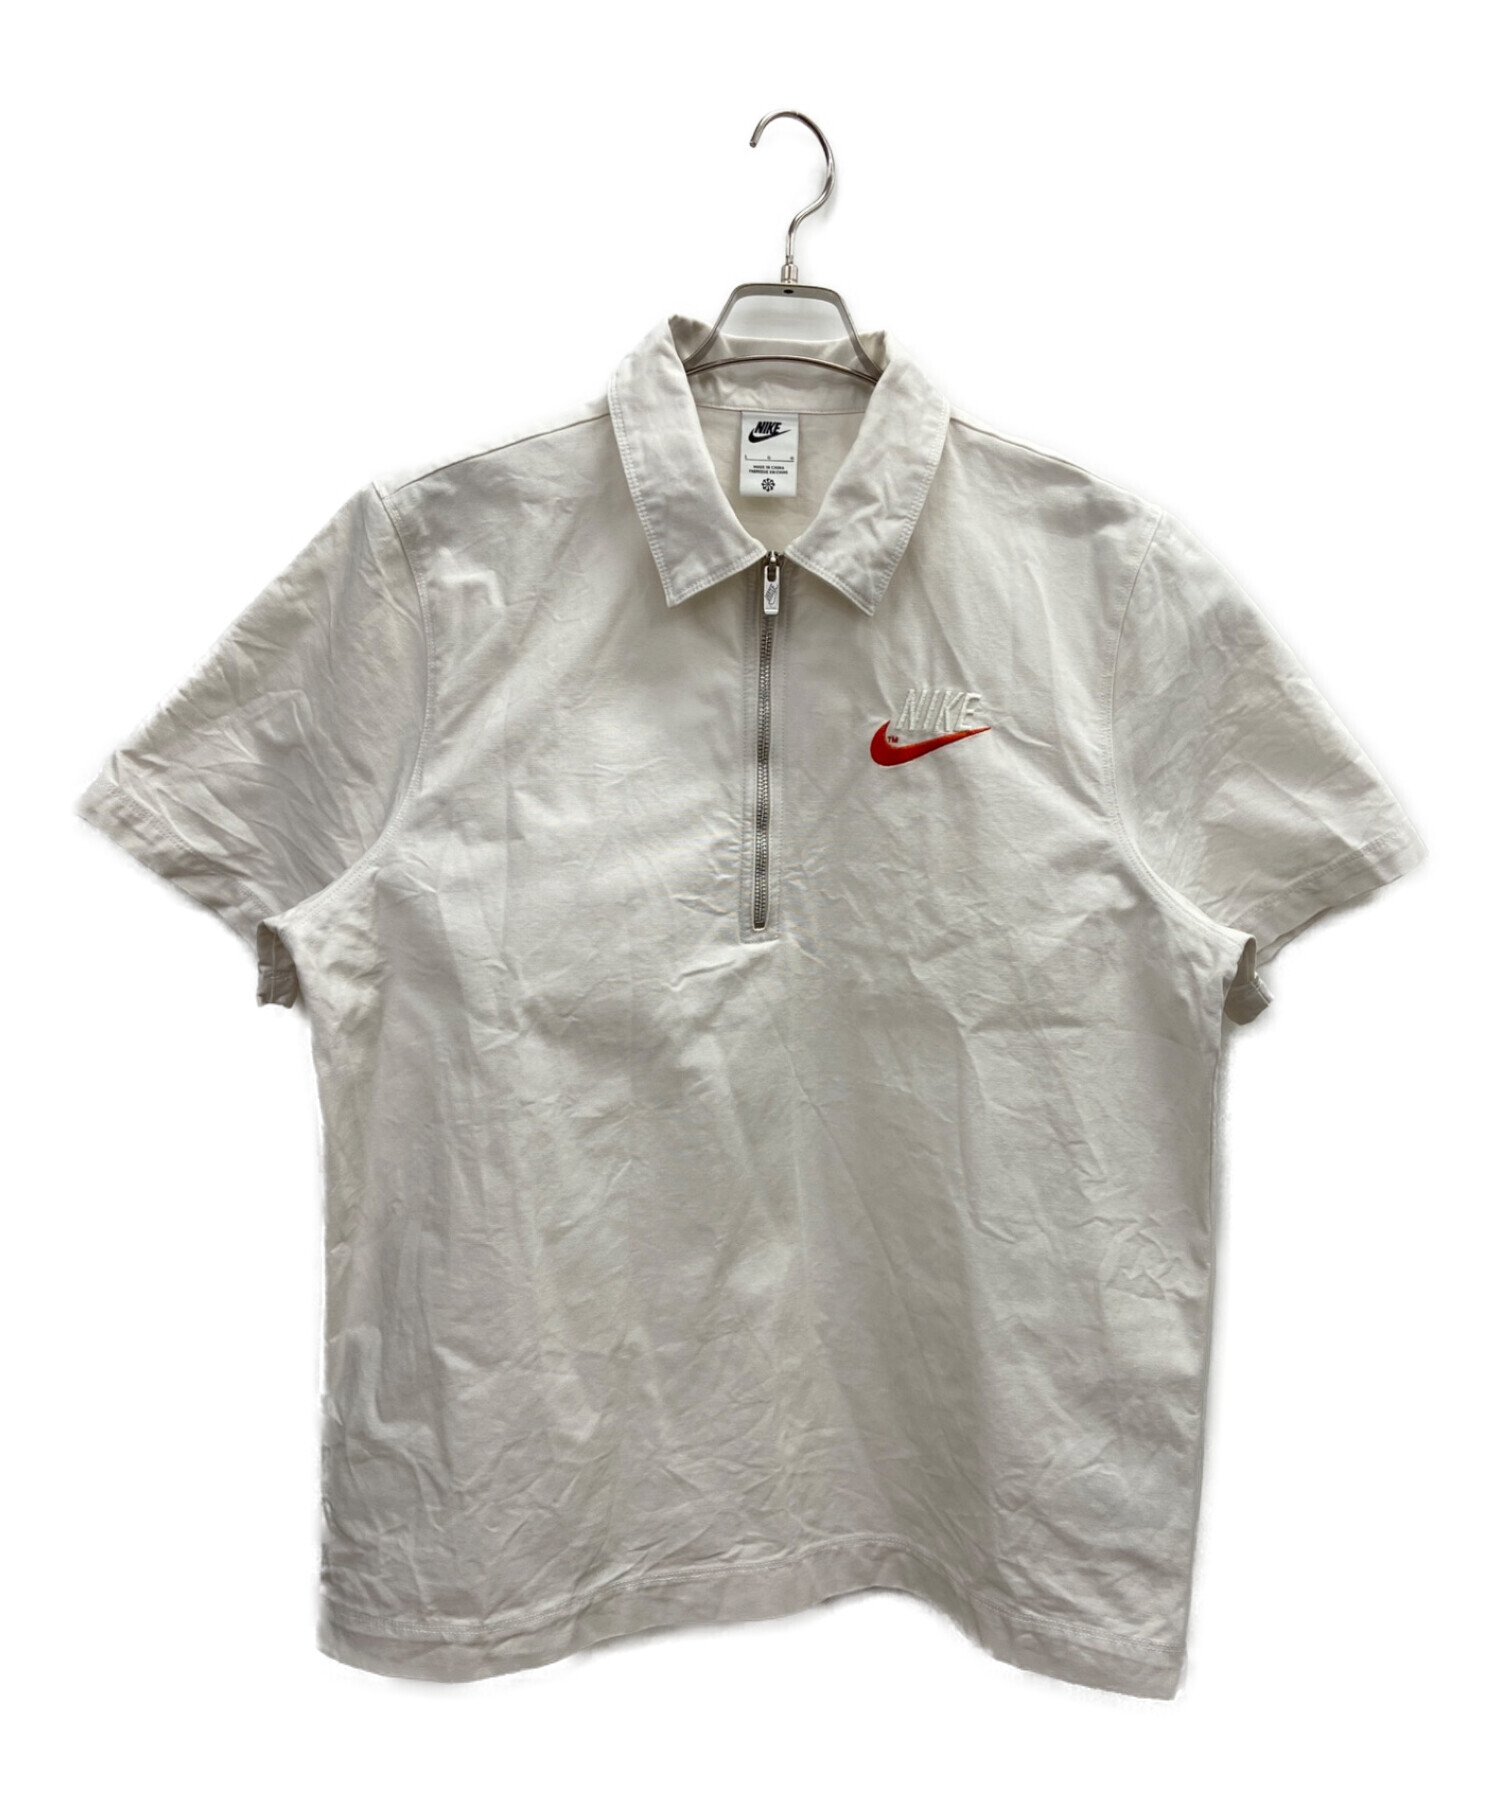 NIKE (ナイキ) 半袖ハーフジップシャツ ホワイト サイズ:L